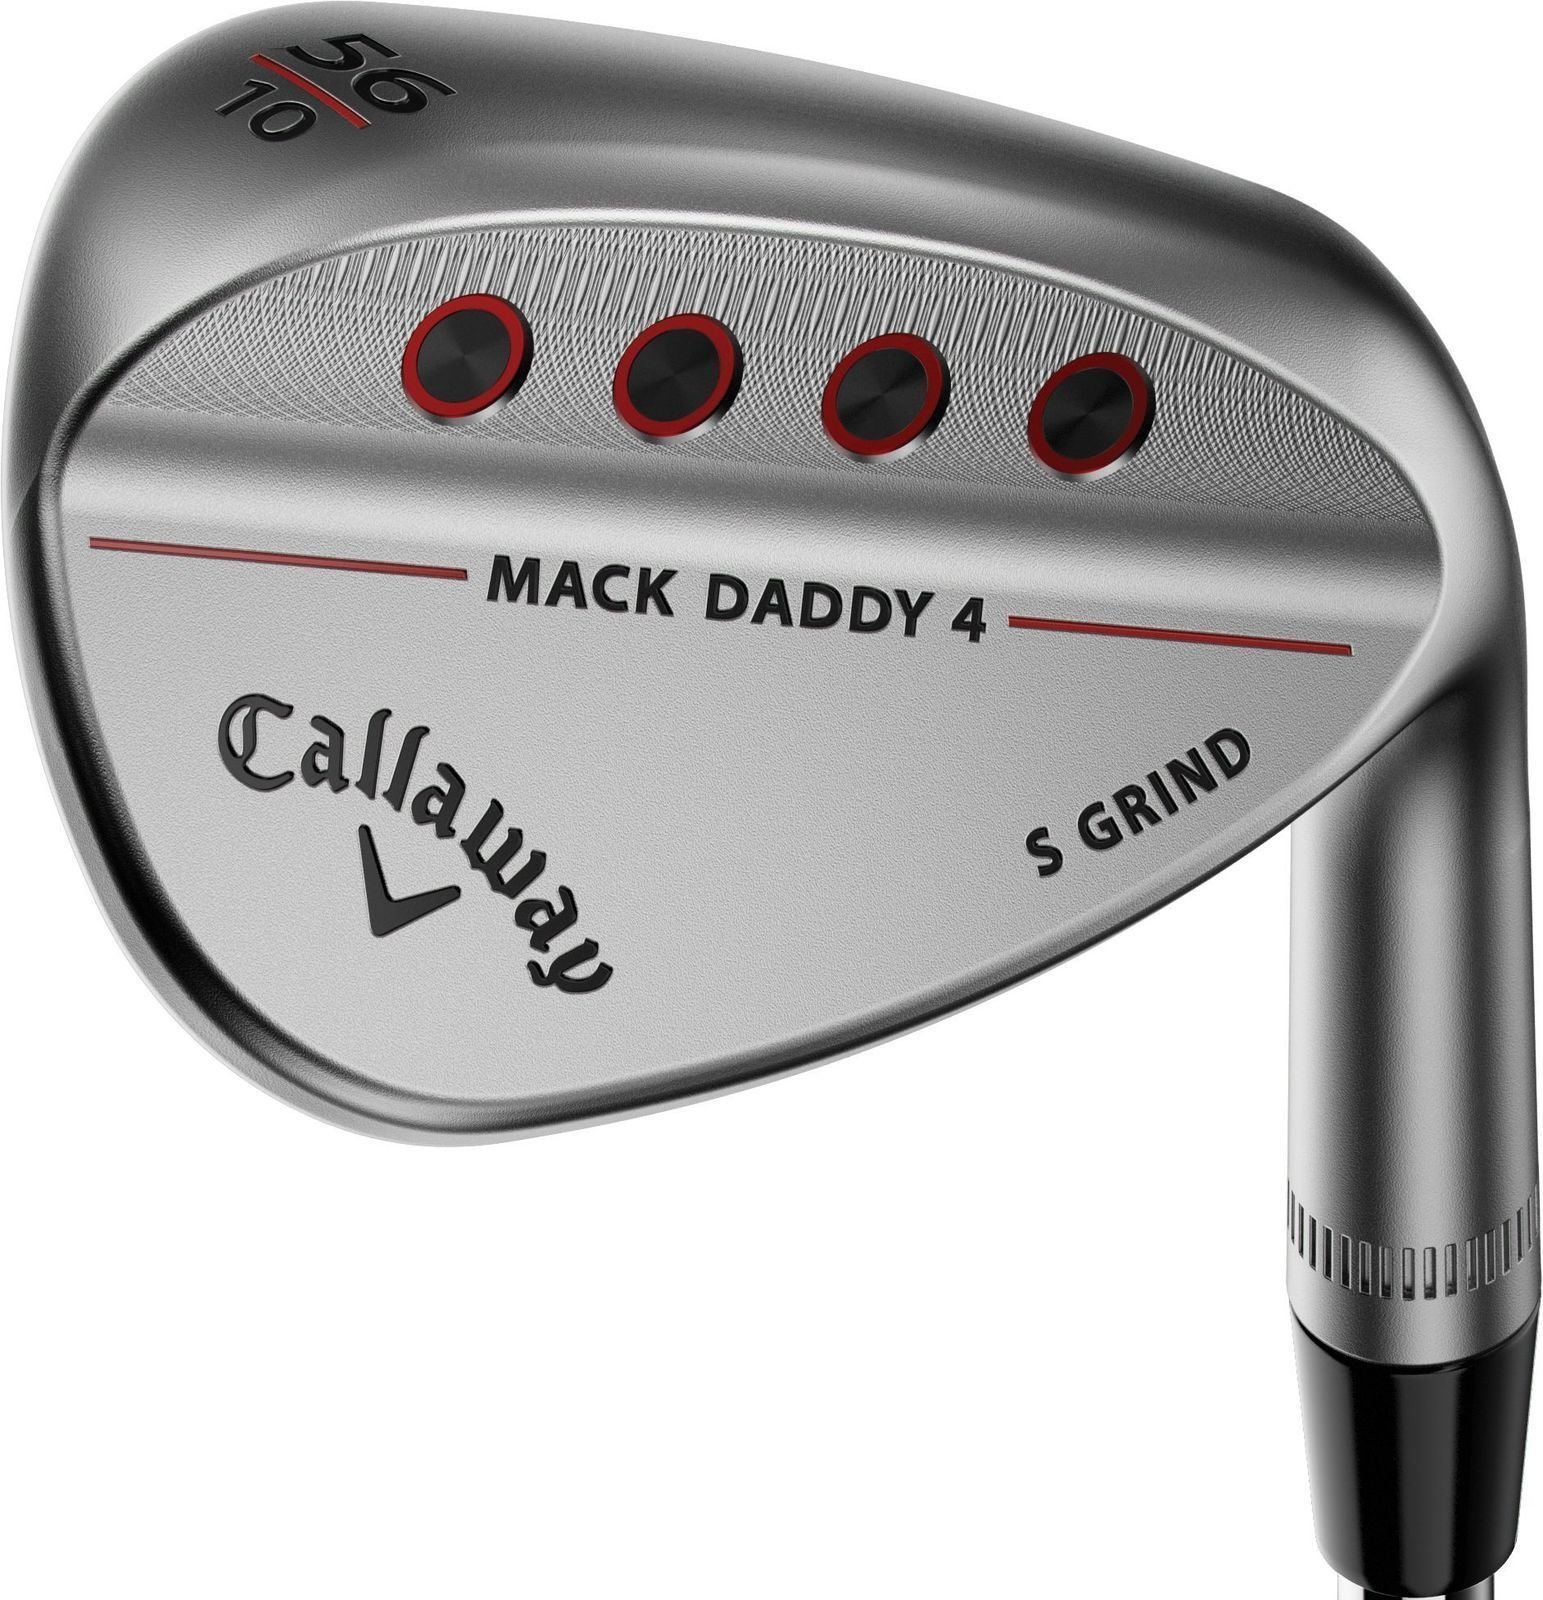 Mazza da golf - wedge Callaway Mack Daddy 4 Chrome Wedge 52-10 S-Grind destro